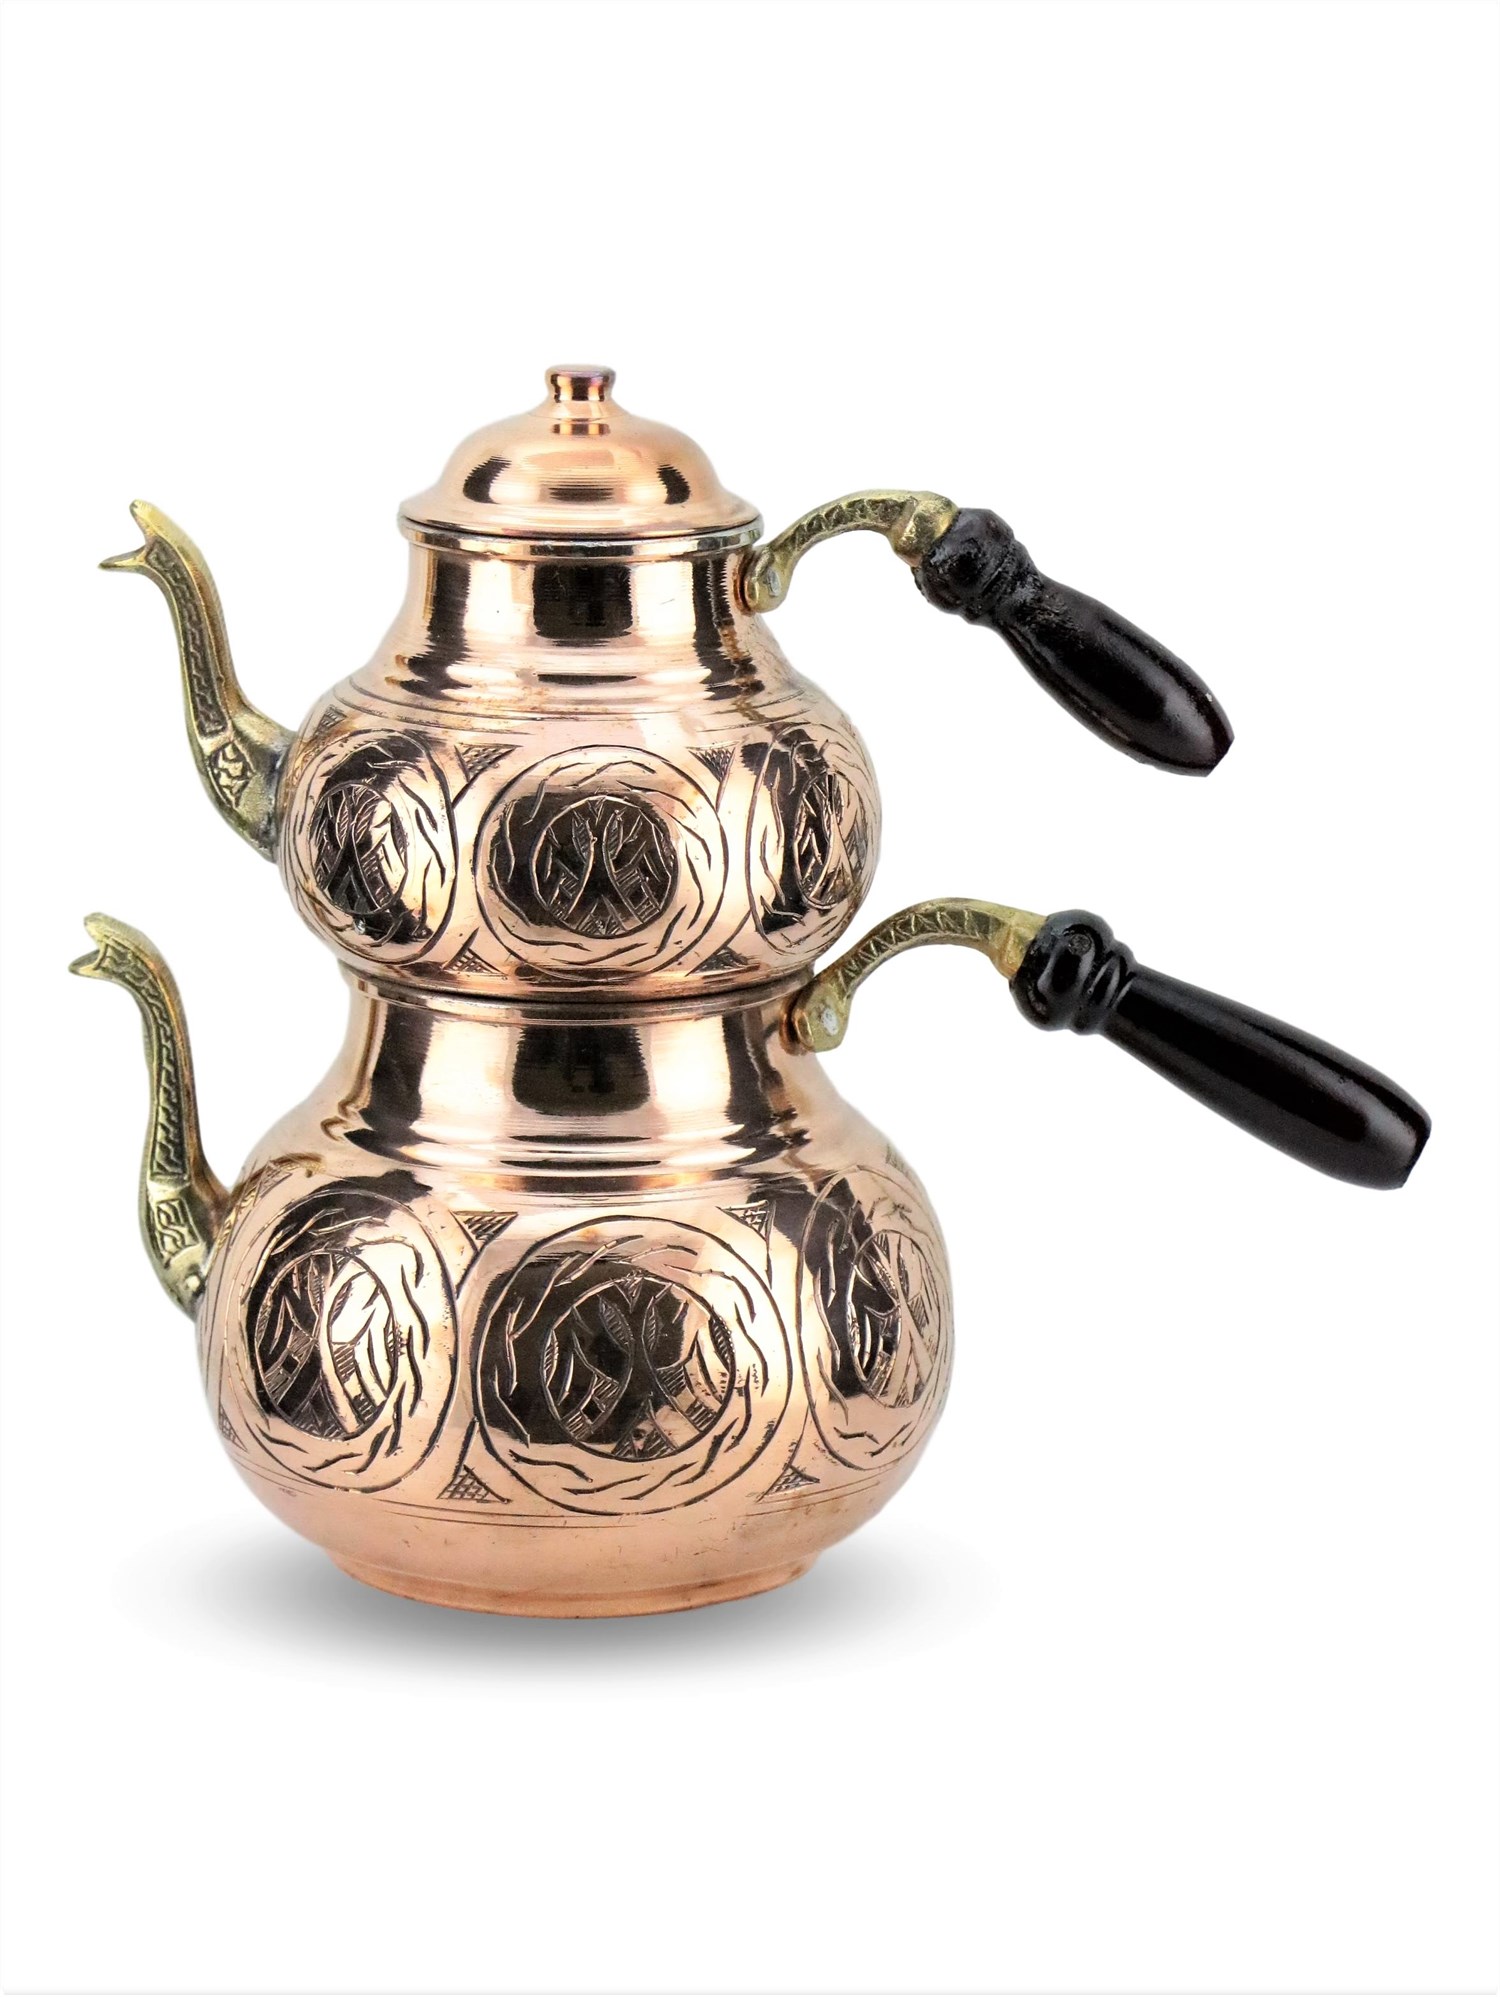 SONAYCOPPER 0.8 mm Handmade Turkish Copper Engraved Tea Pot Kettle Stovetop Teapot(373)